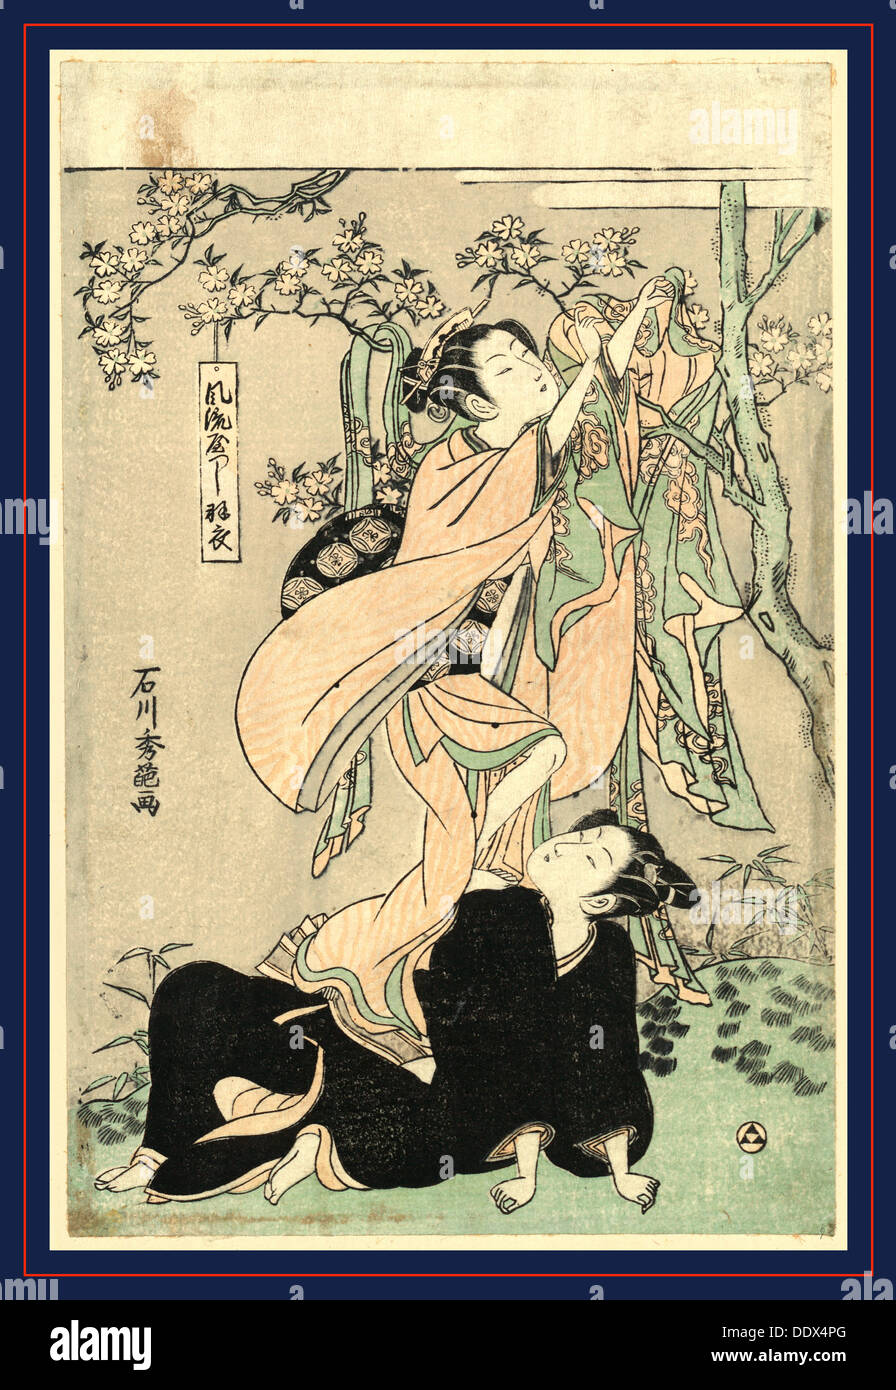 Furyu yastushi hagoromo, Updated version of Hagoromo. [between 1764 and 1772], 1 print : woodcut, color ; 25.7 x 16.8 cm., Stock Photo